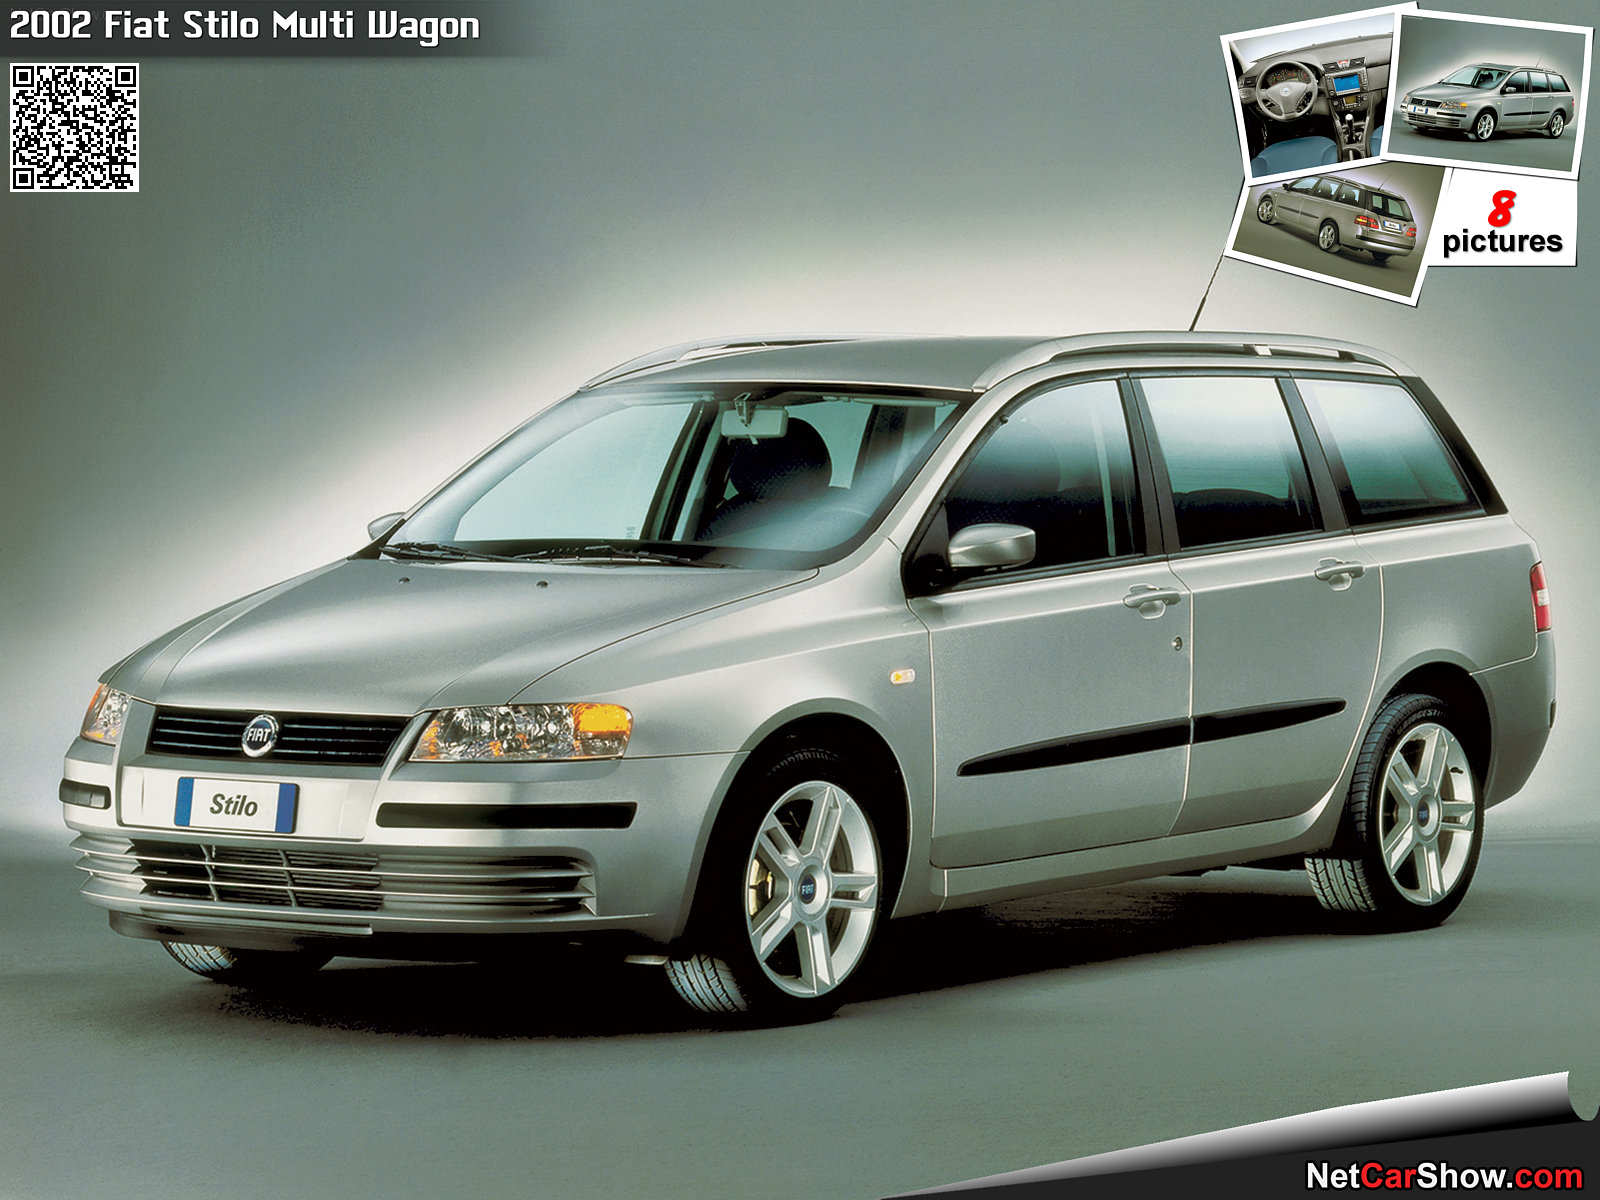 Fiat-Stilo_Multi_Wagon-2002-1600-01.jpg